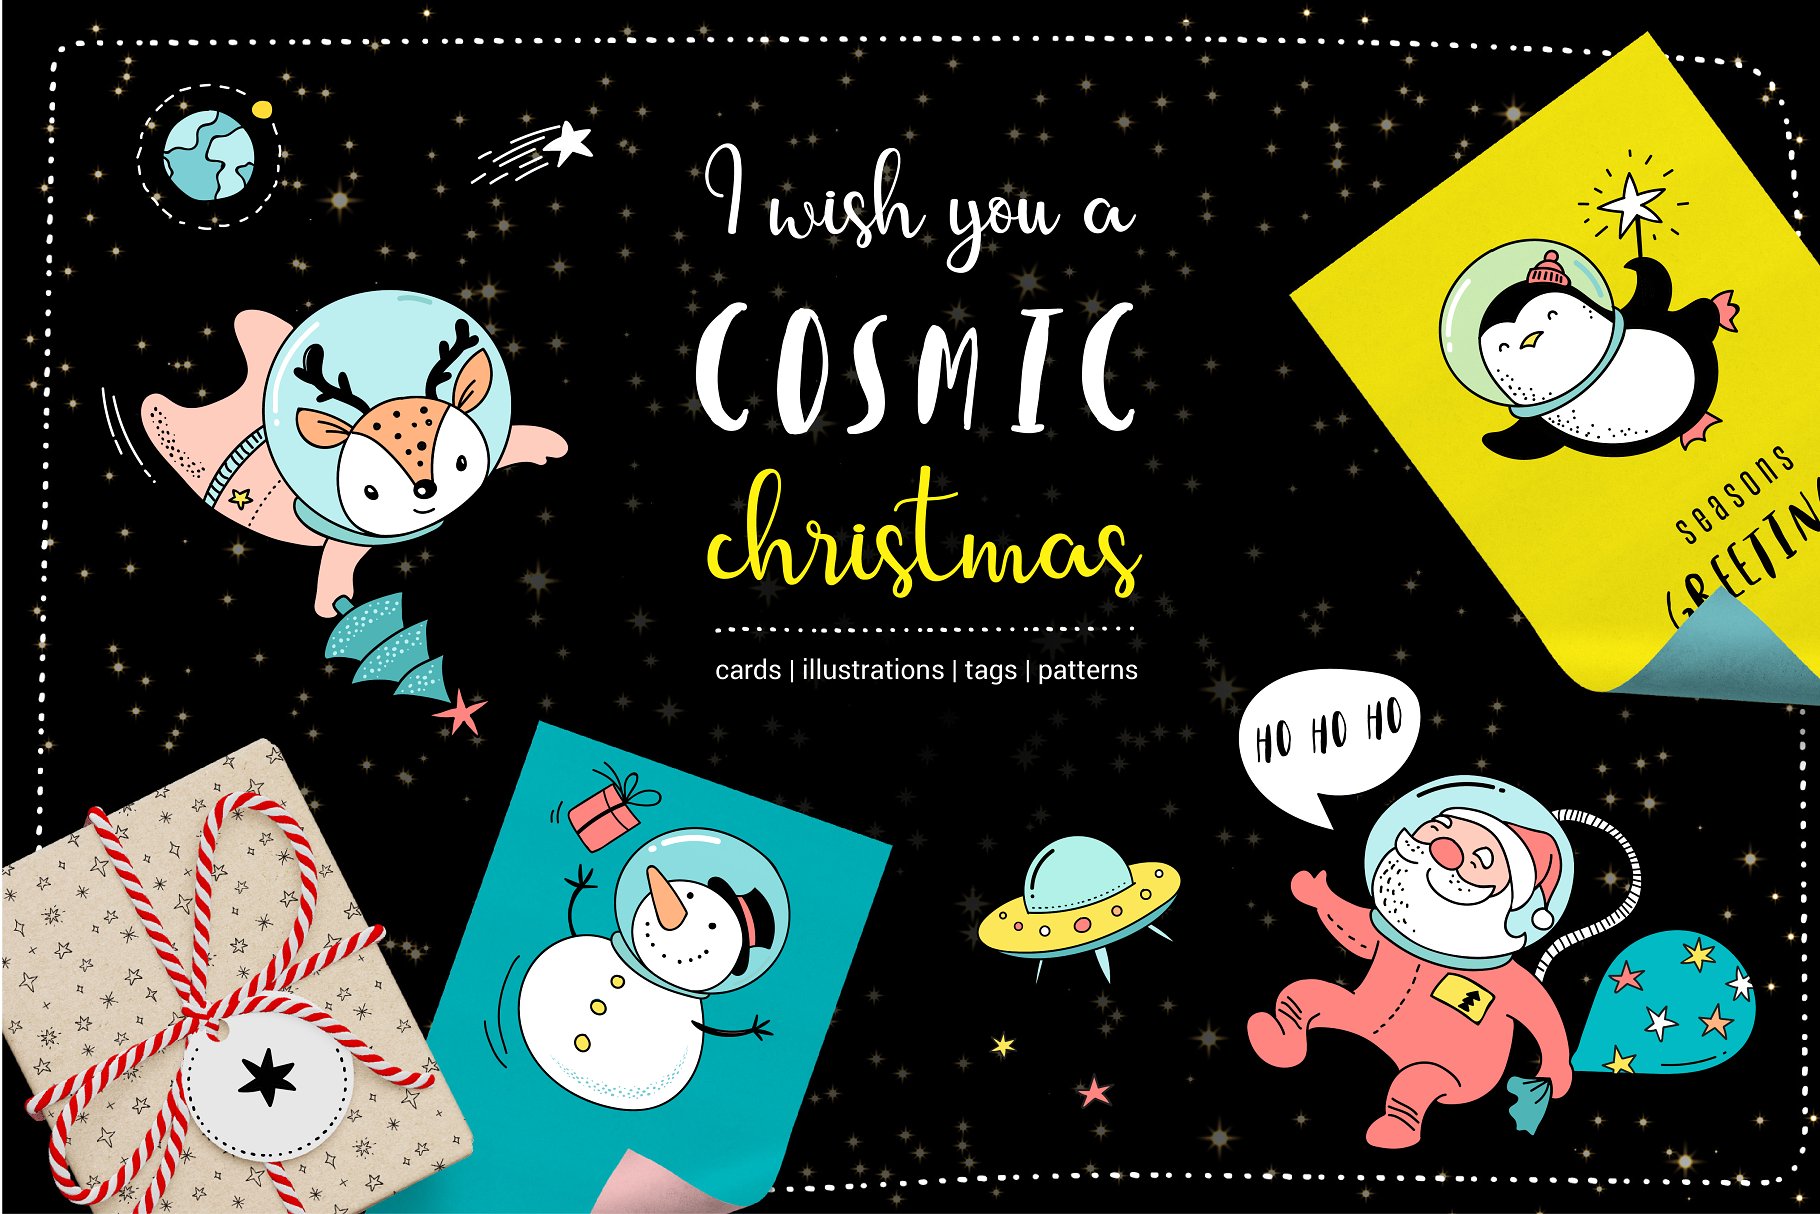 外太空宇宙圣诞节手绘插画素材 Cosmic Christmas in outer space插图